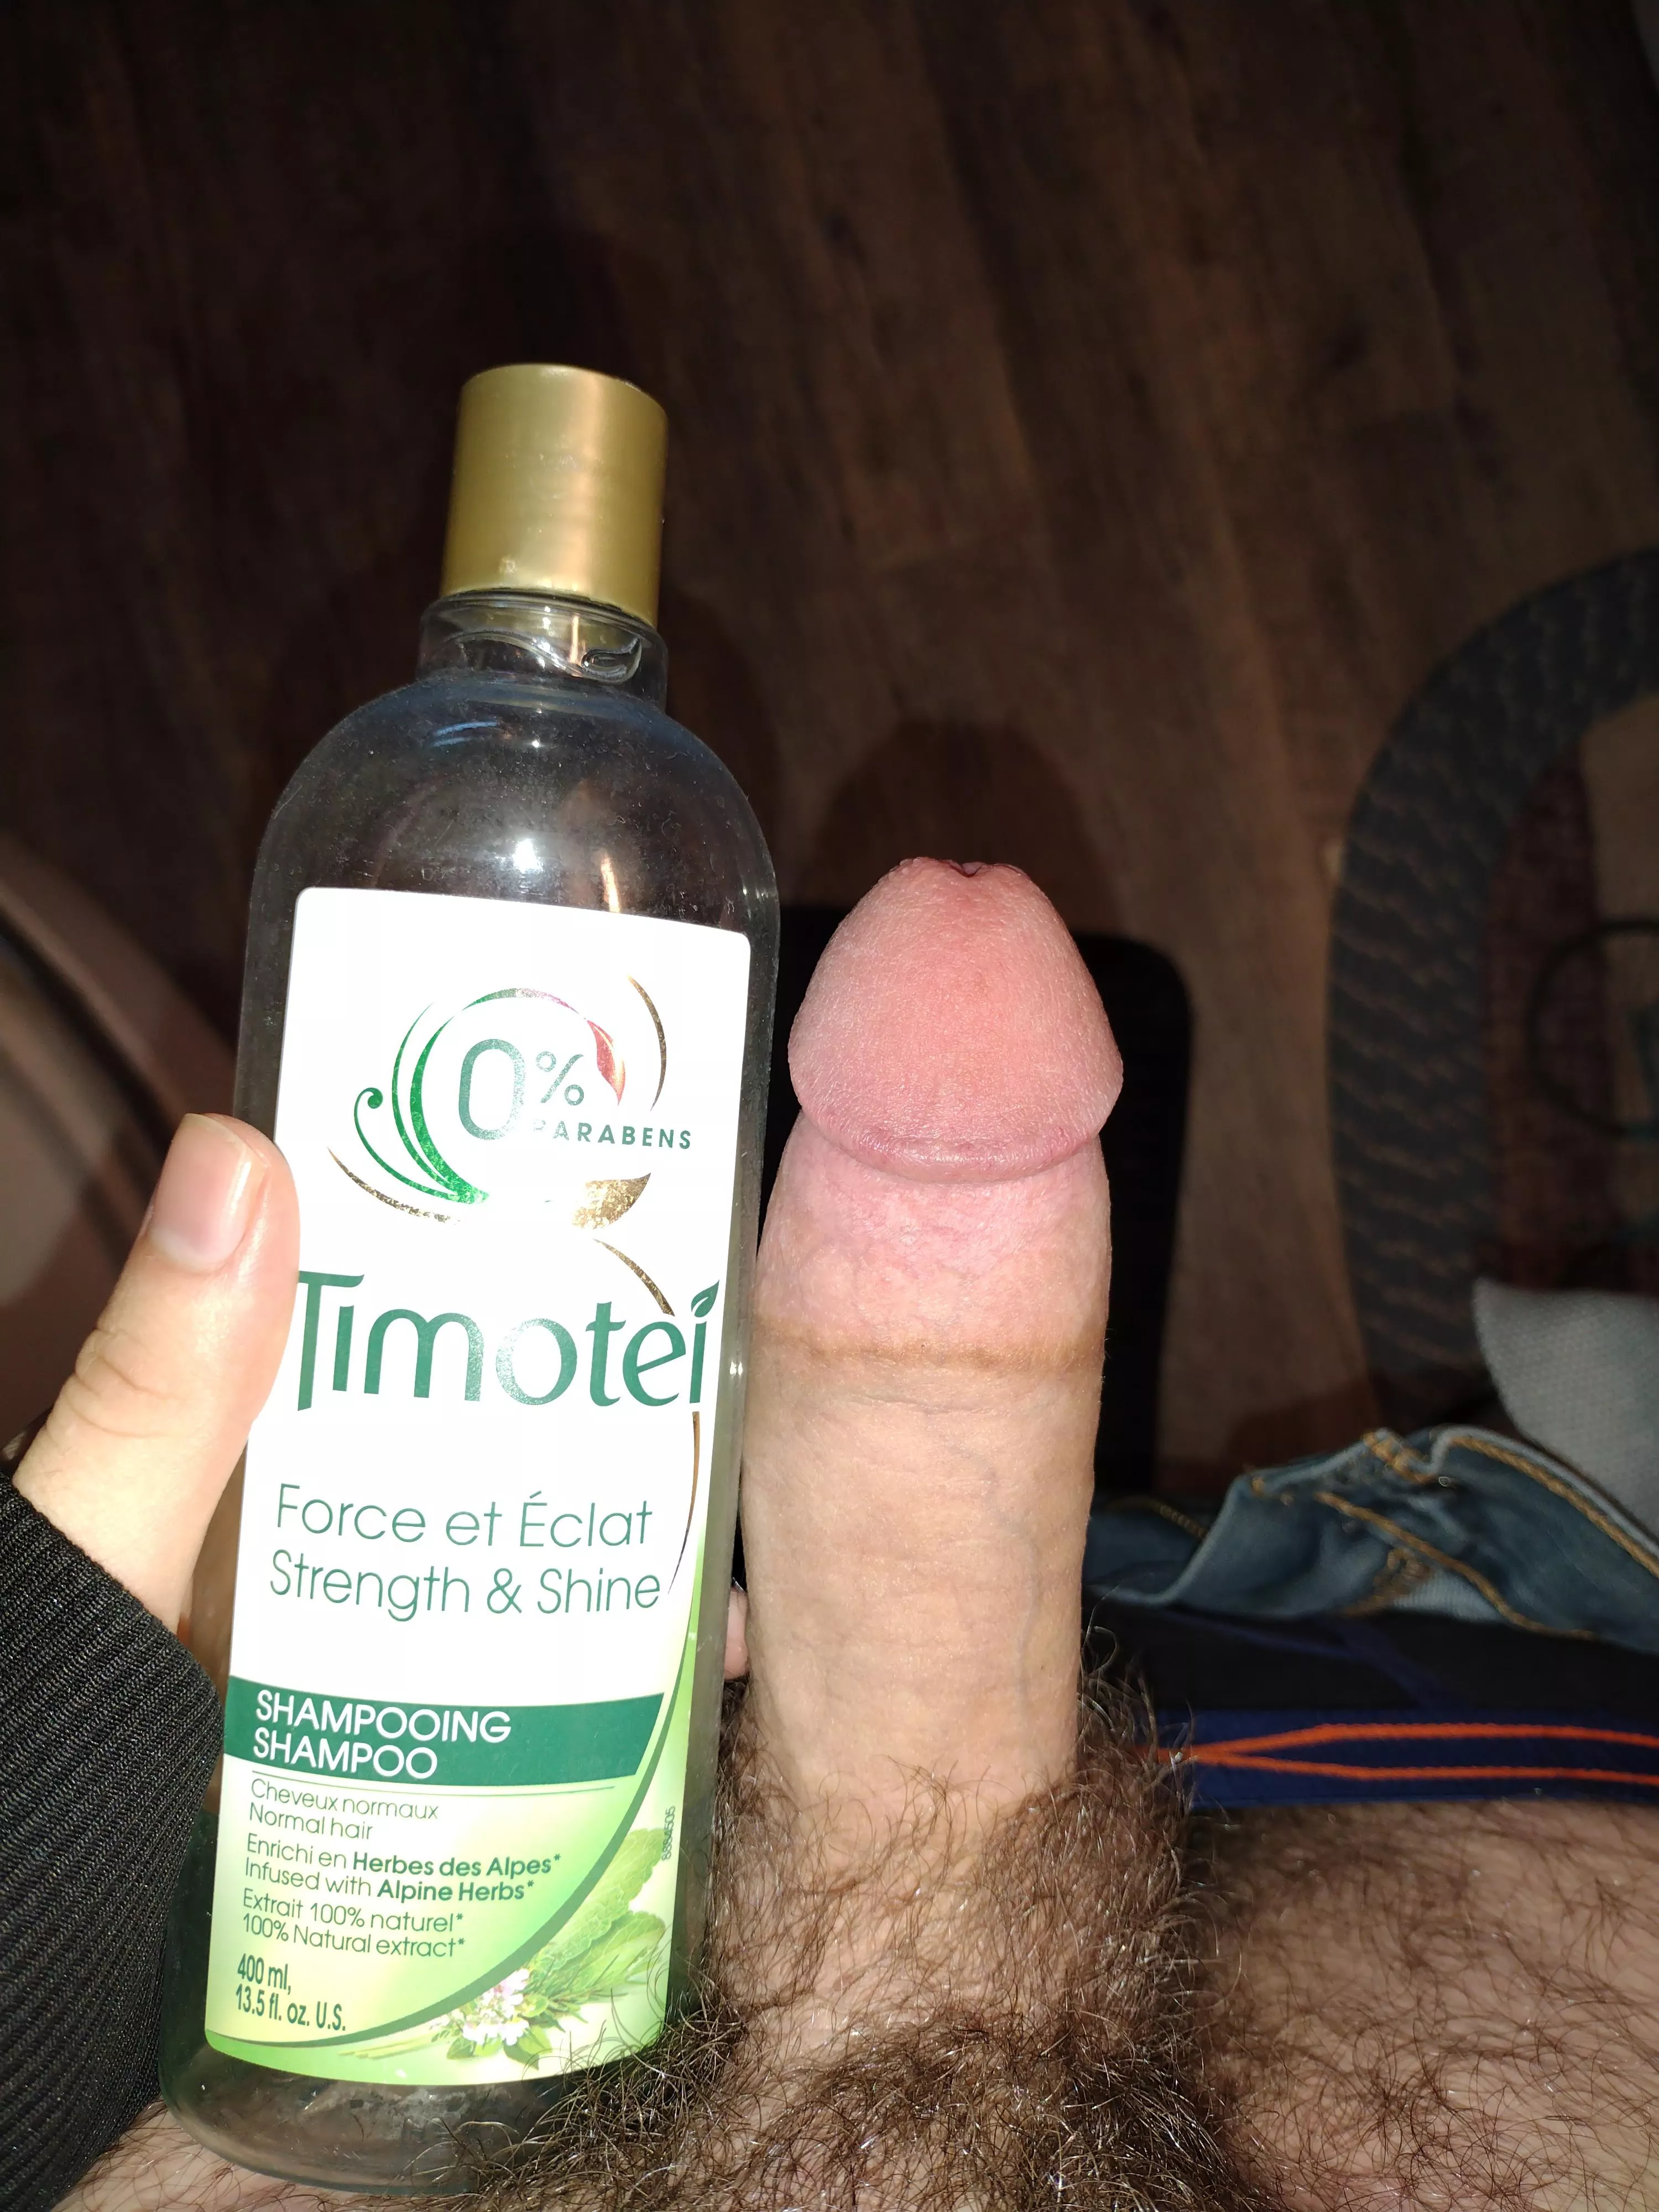 Cumming in shampoo bottles reddit